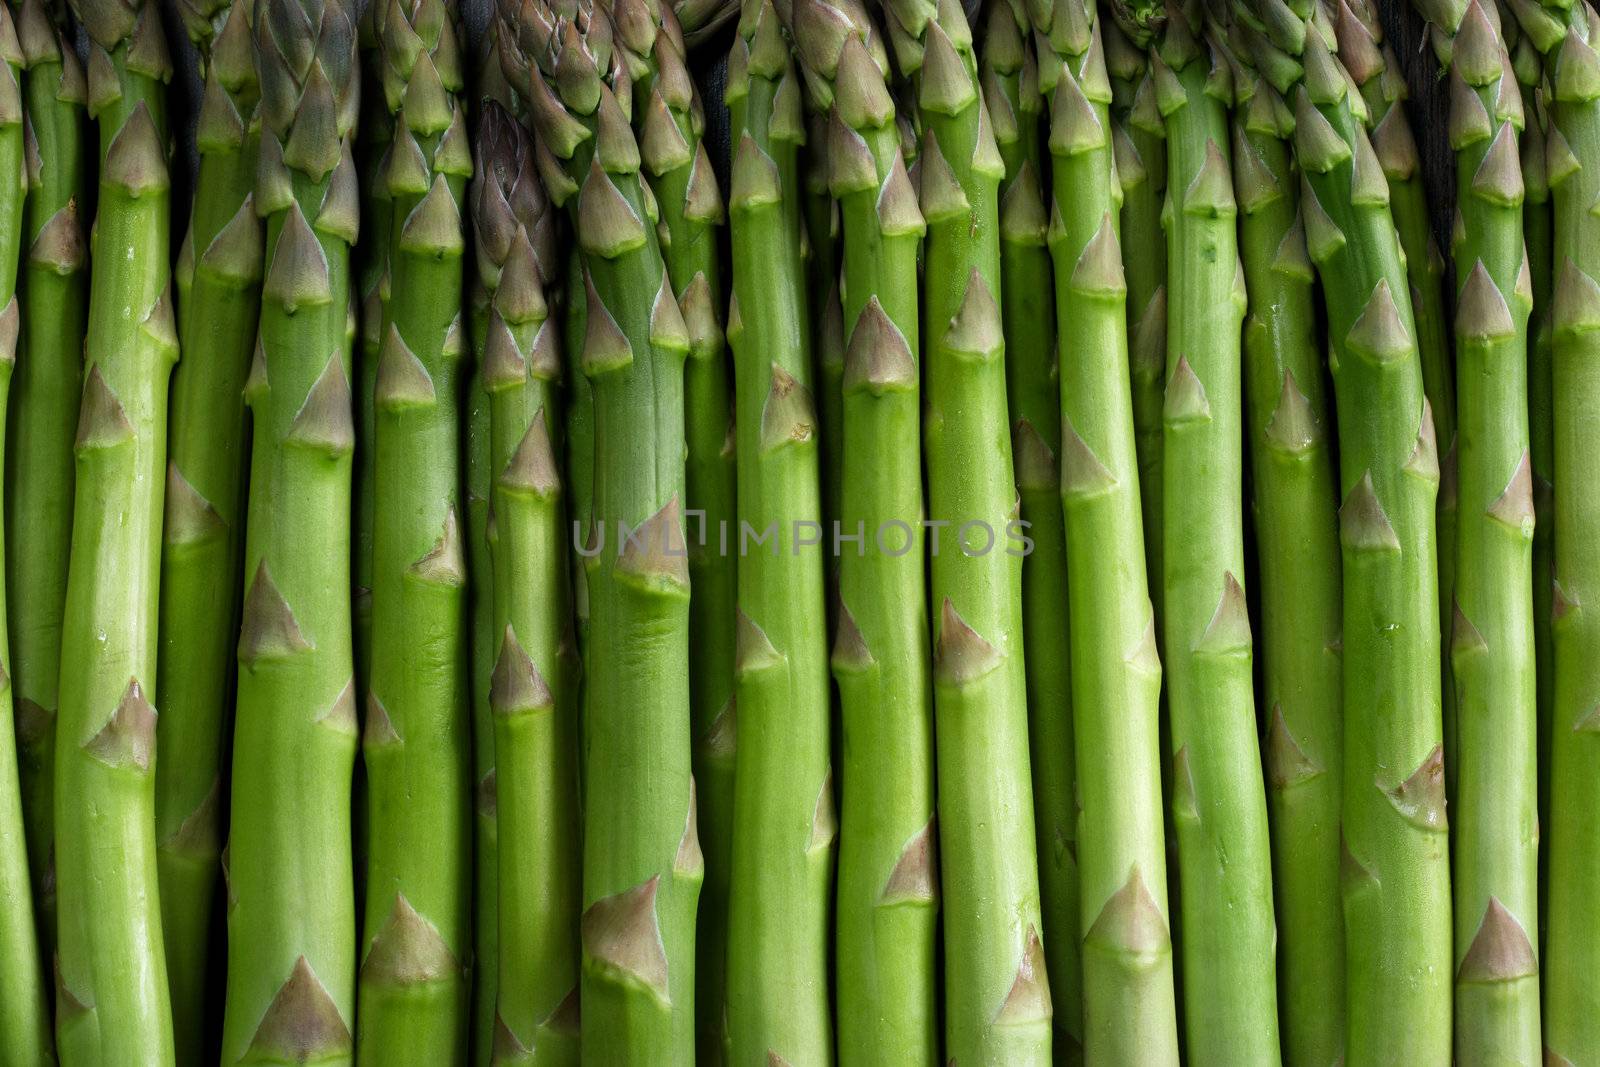 Horizontal background image of asparagus stalks.
